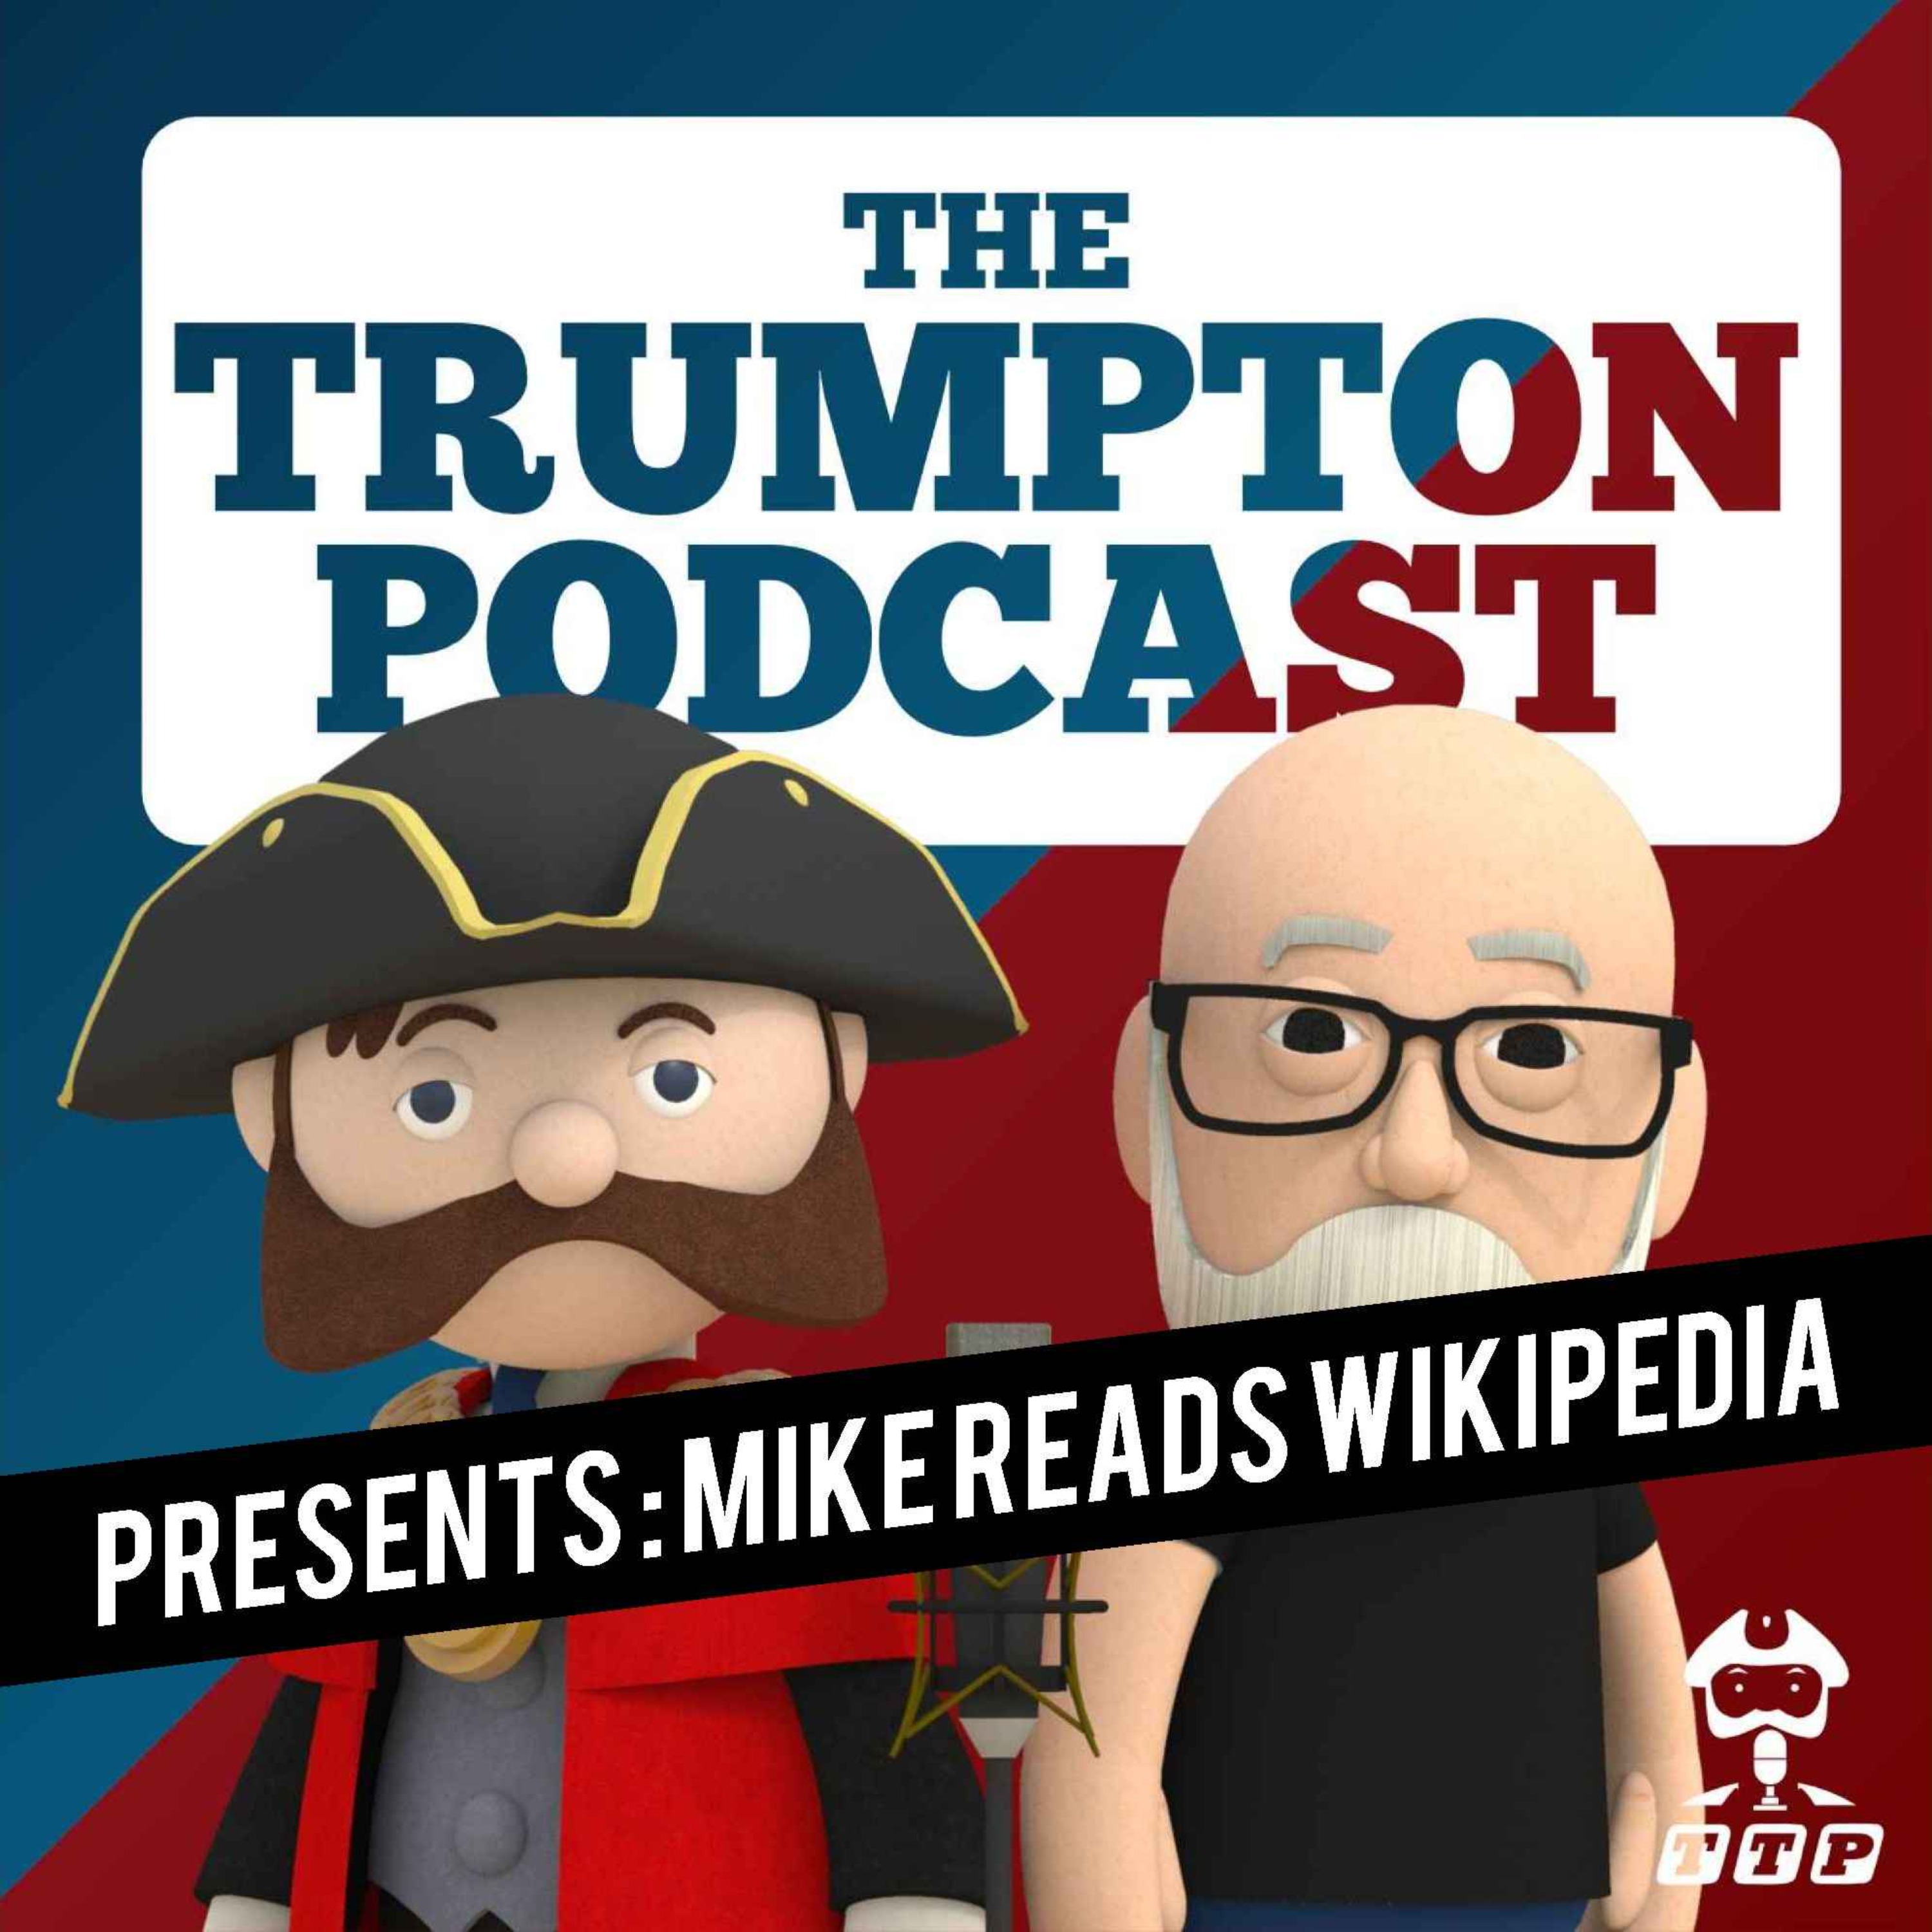 TBC Presents : Mike Reads Wkipedia